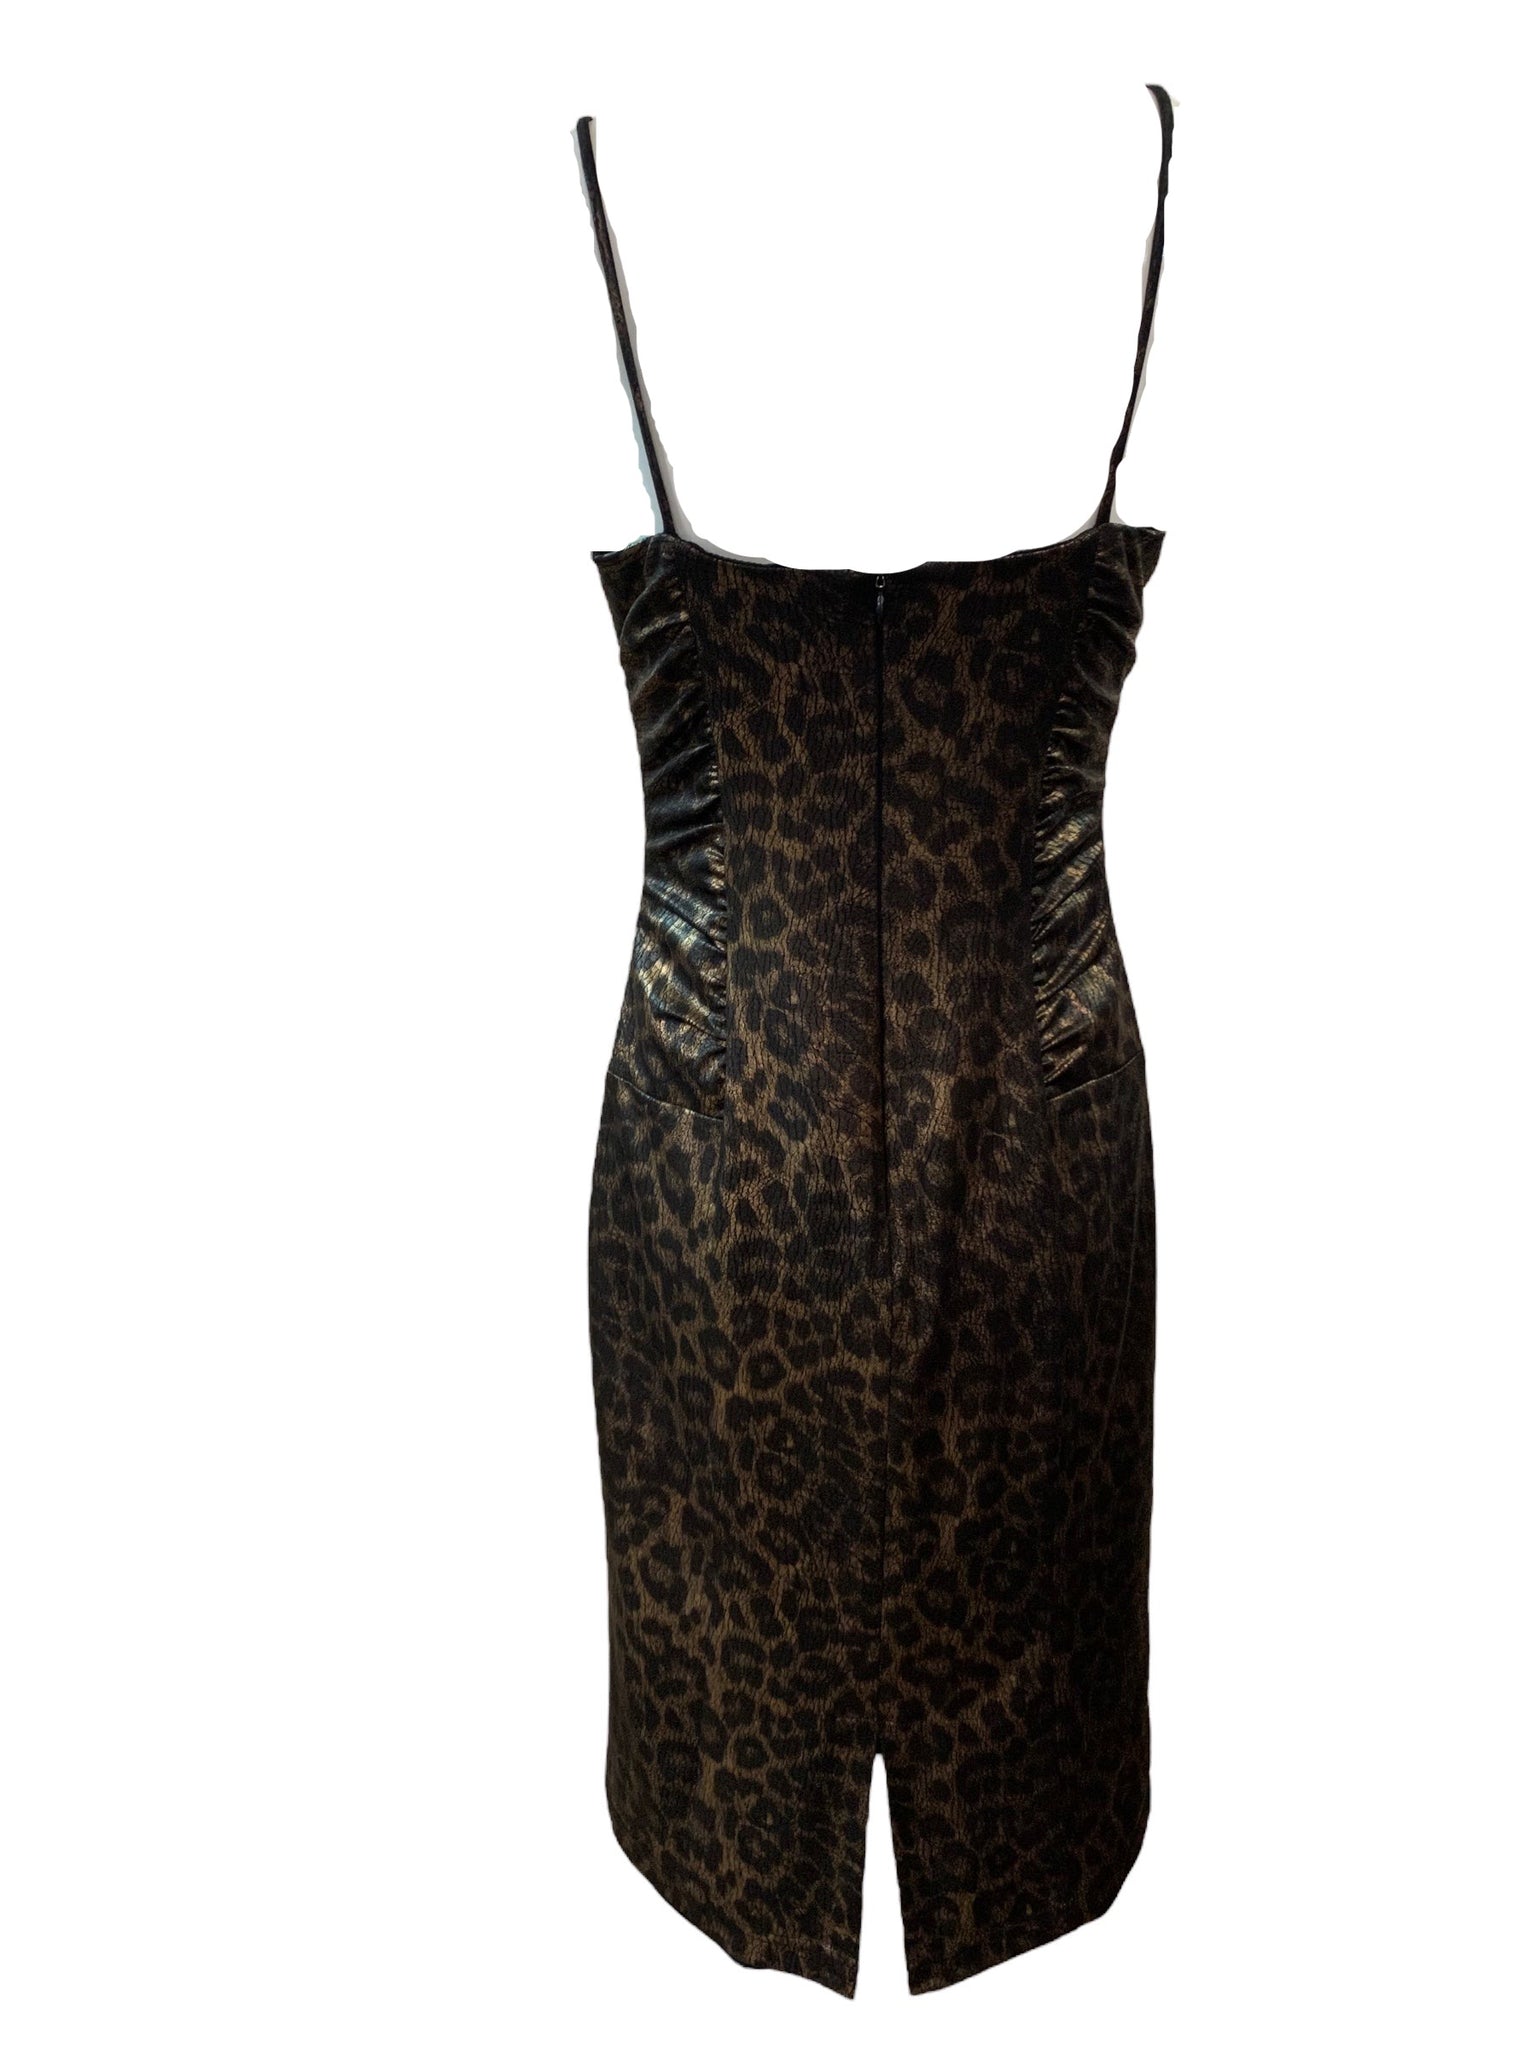 D&G  Leopard Print Body Con Dress BACK 3 of 6